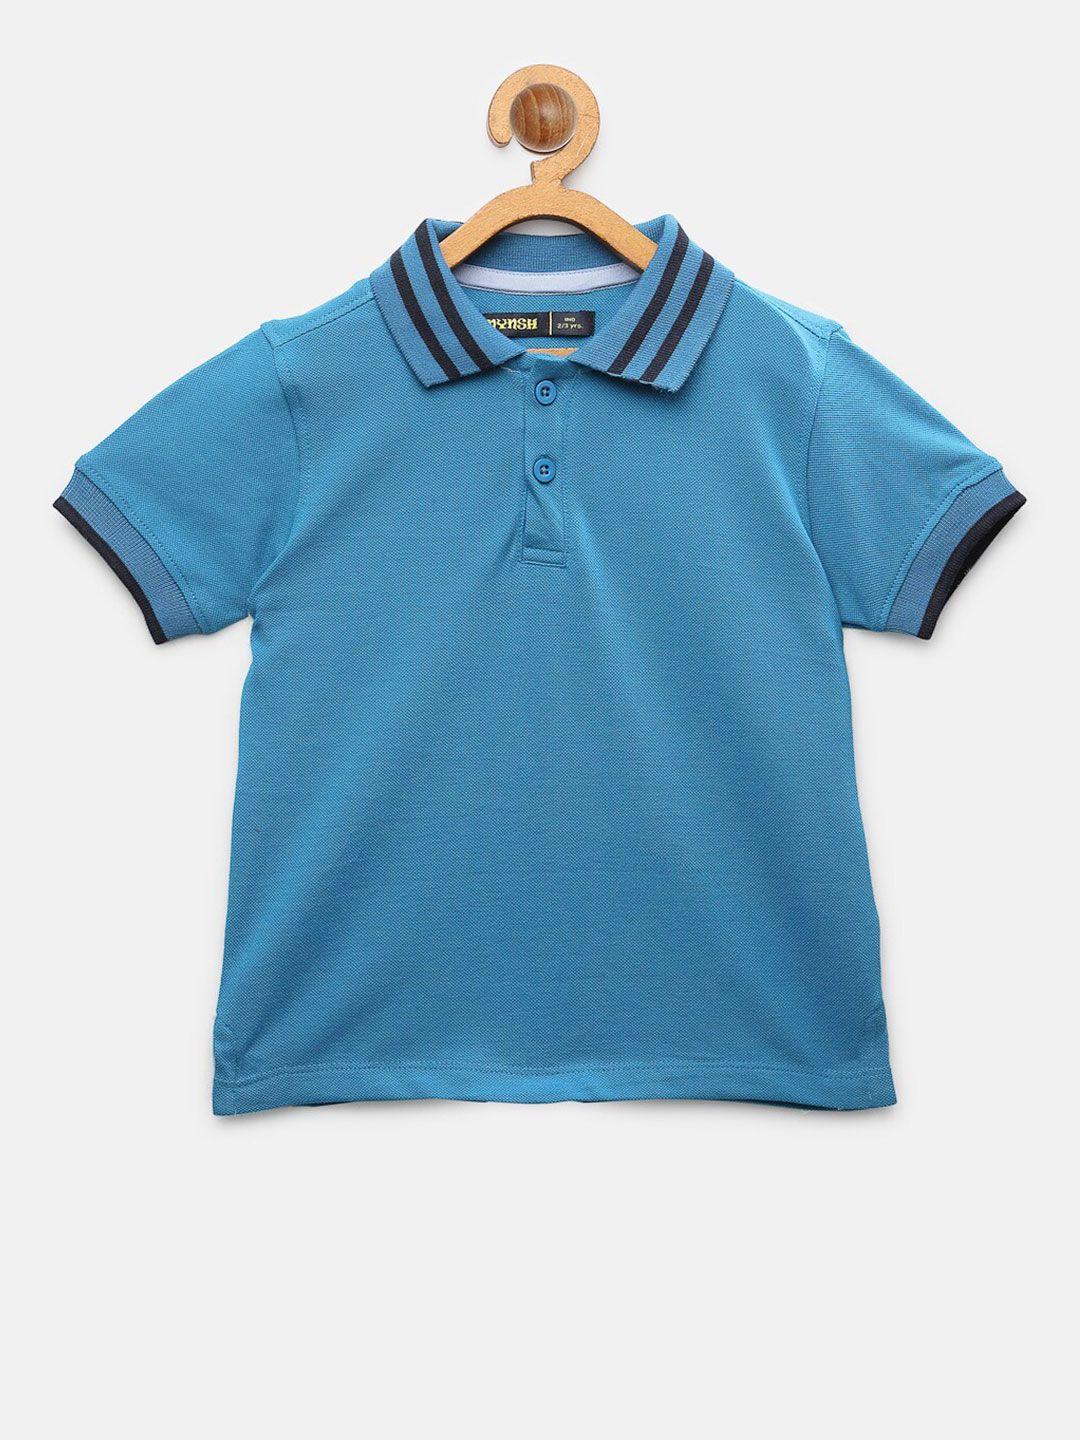 nynsh boys turquoise blue polo collar pure cotton t-shirt